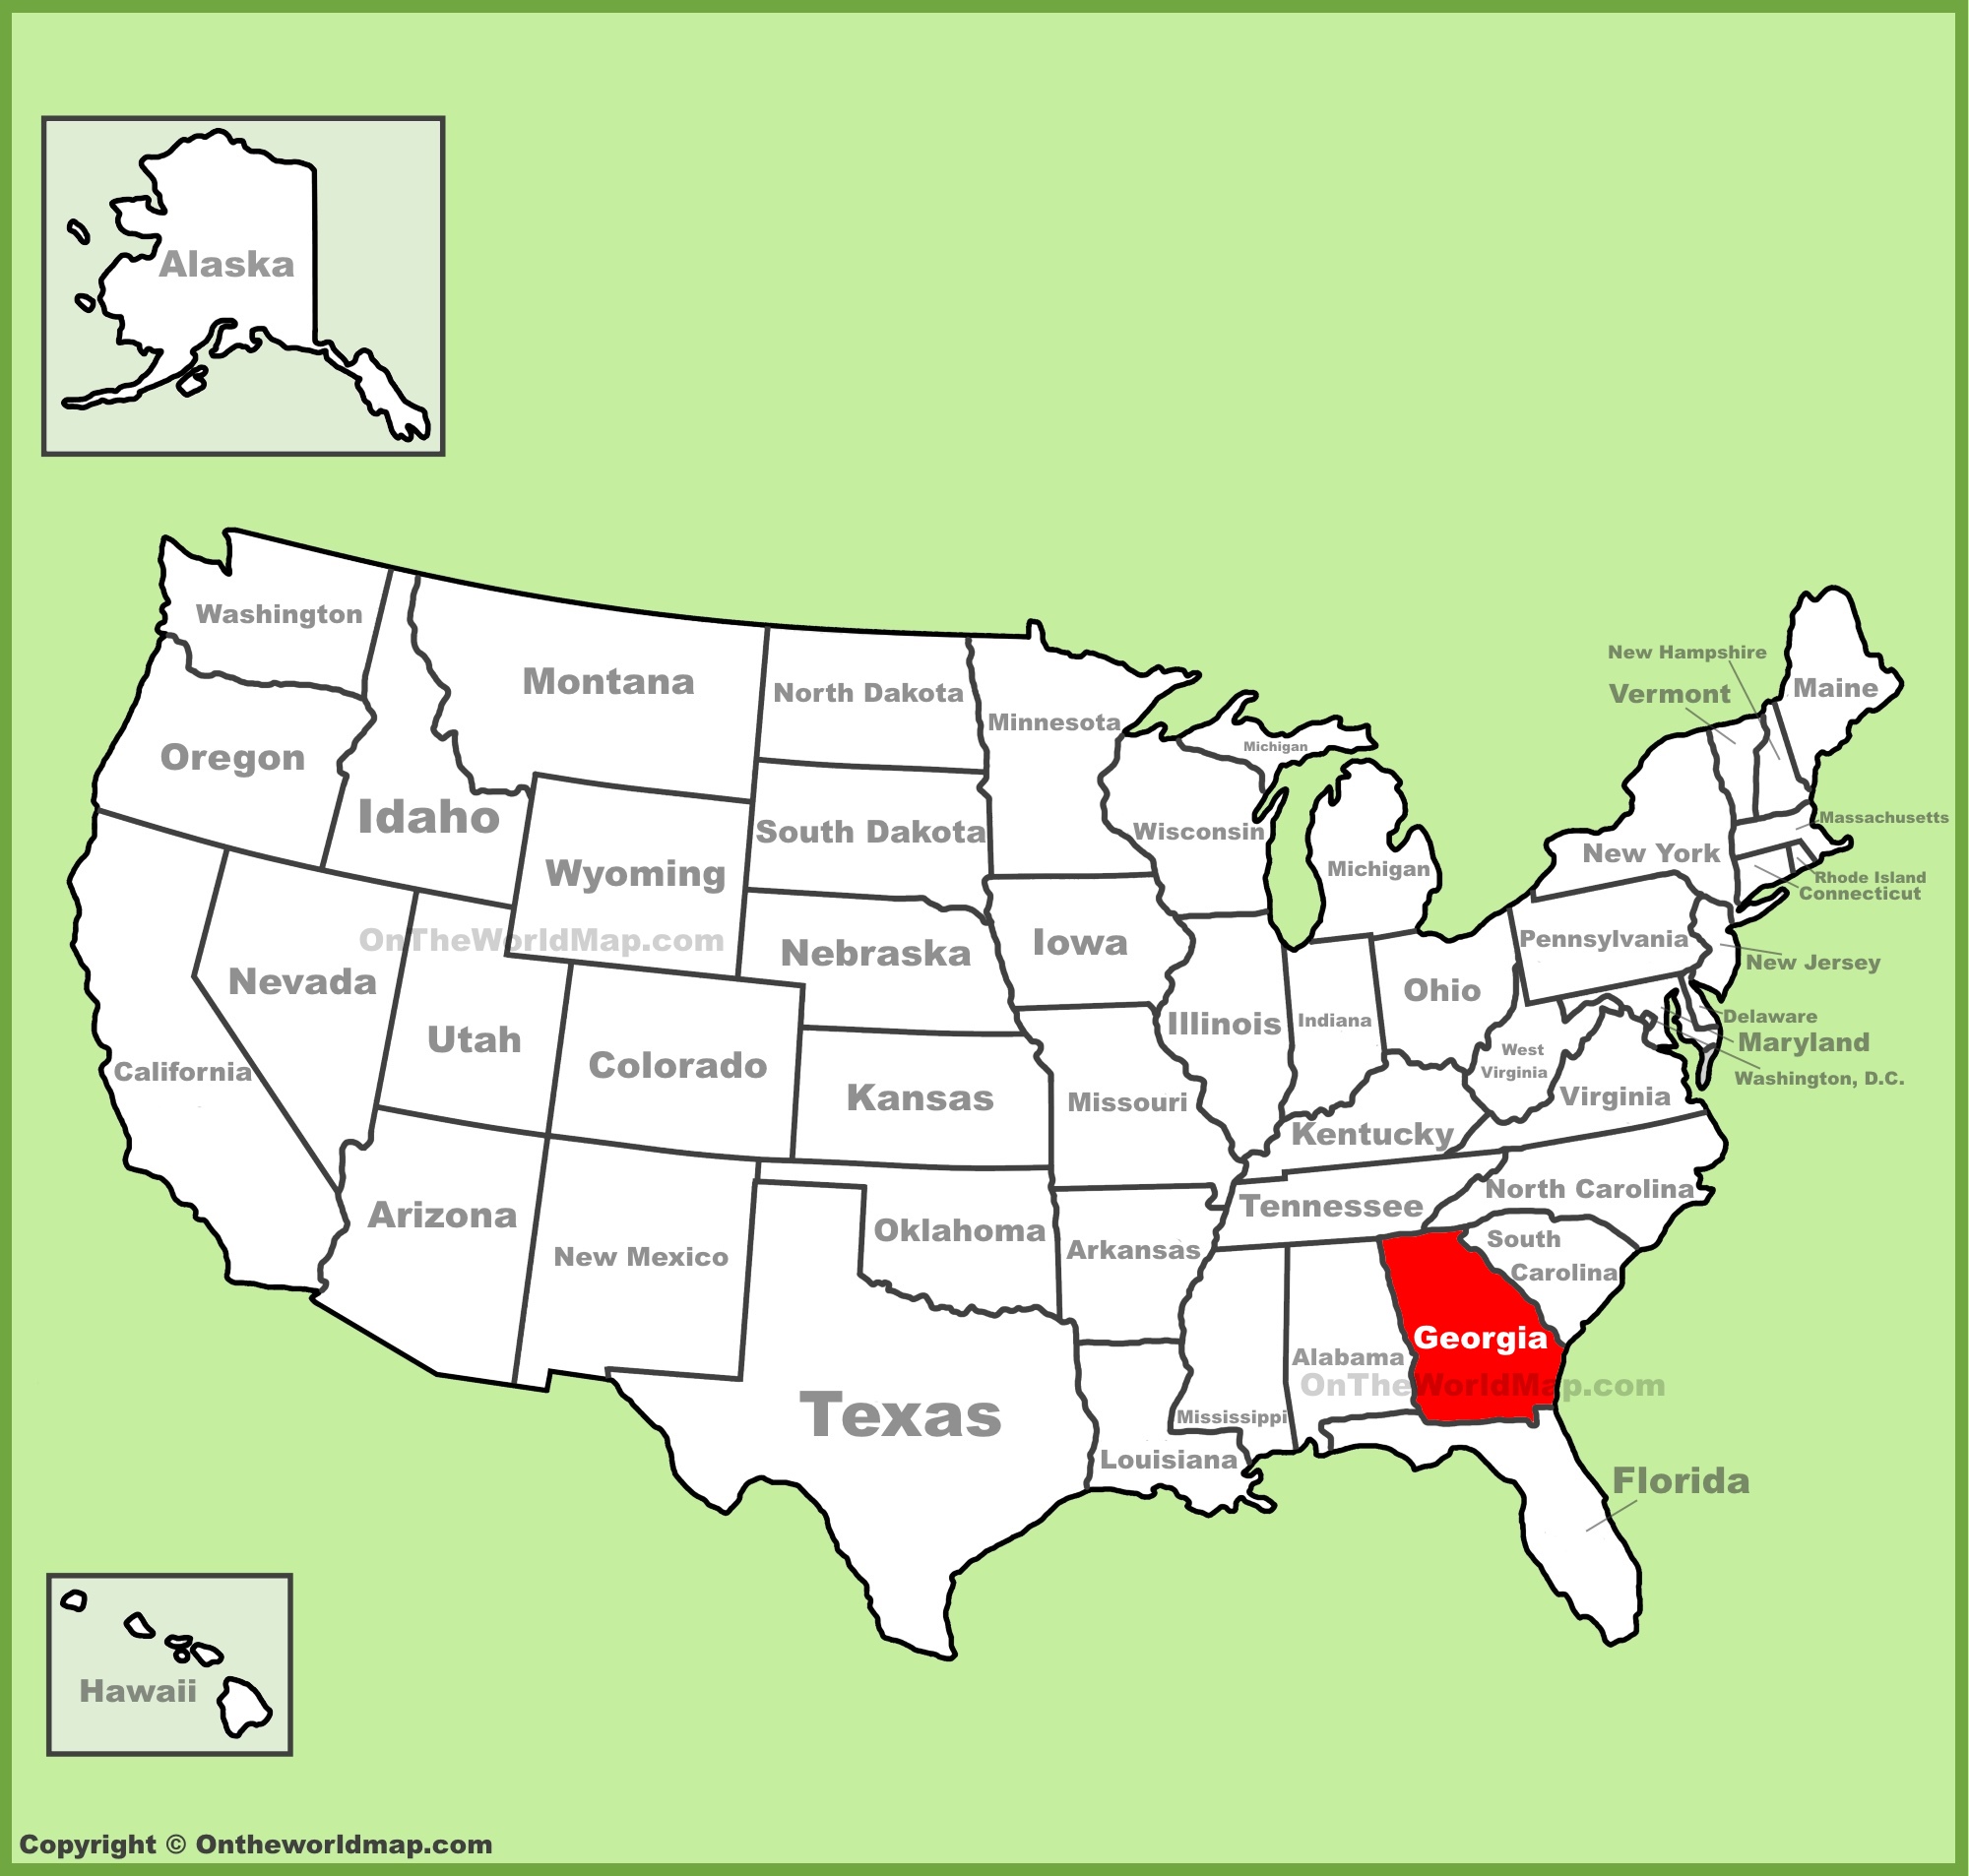 Georgia Location On The U S Map